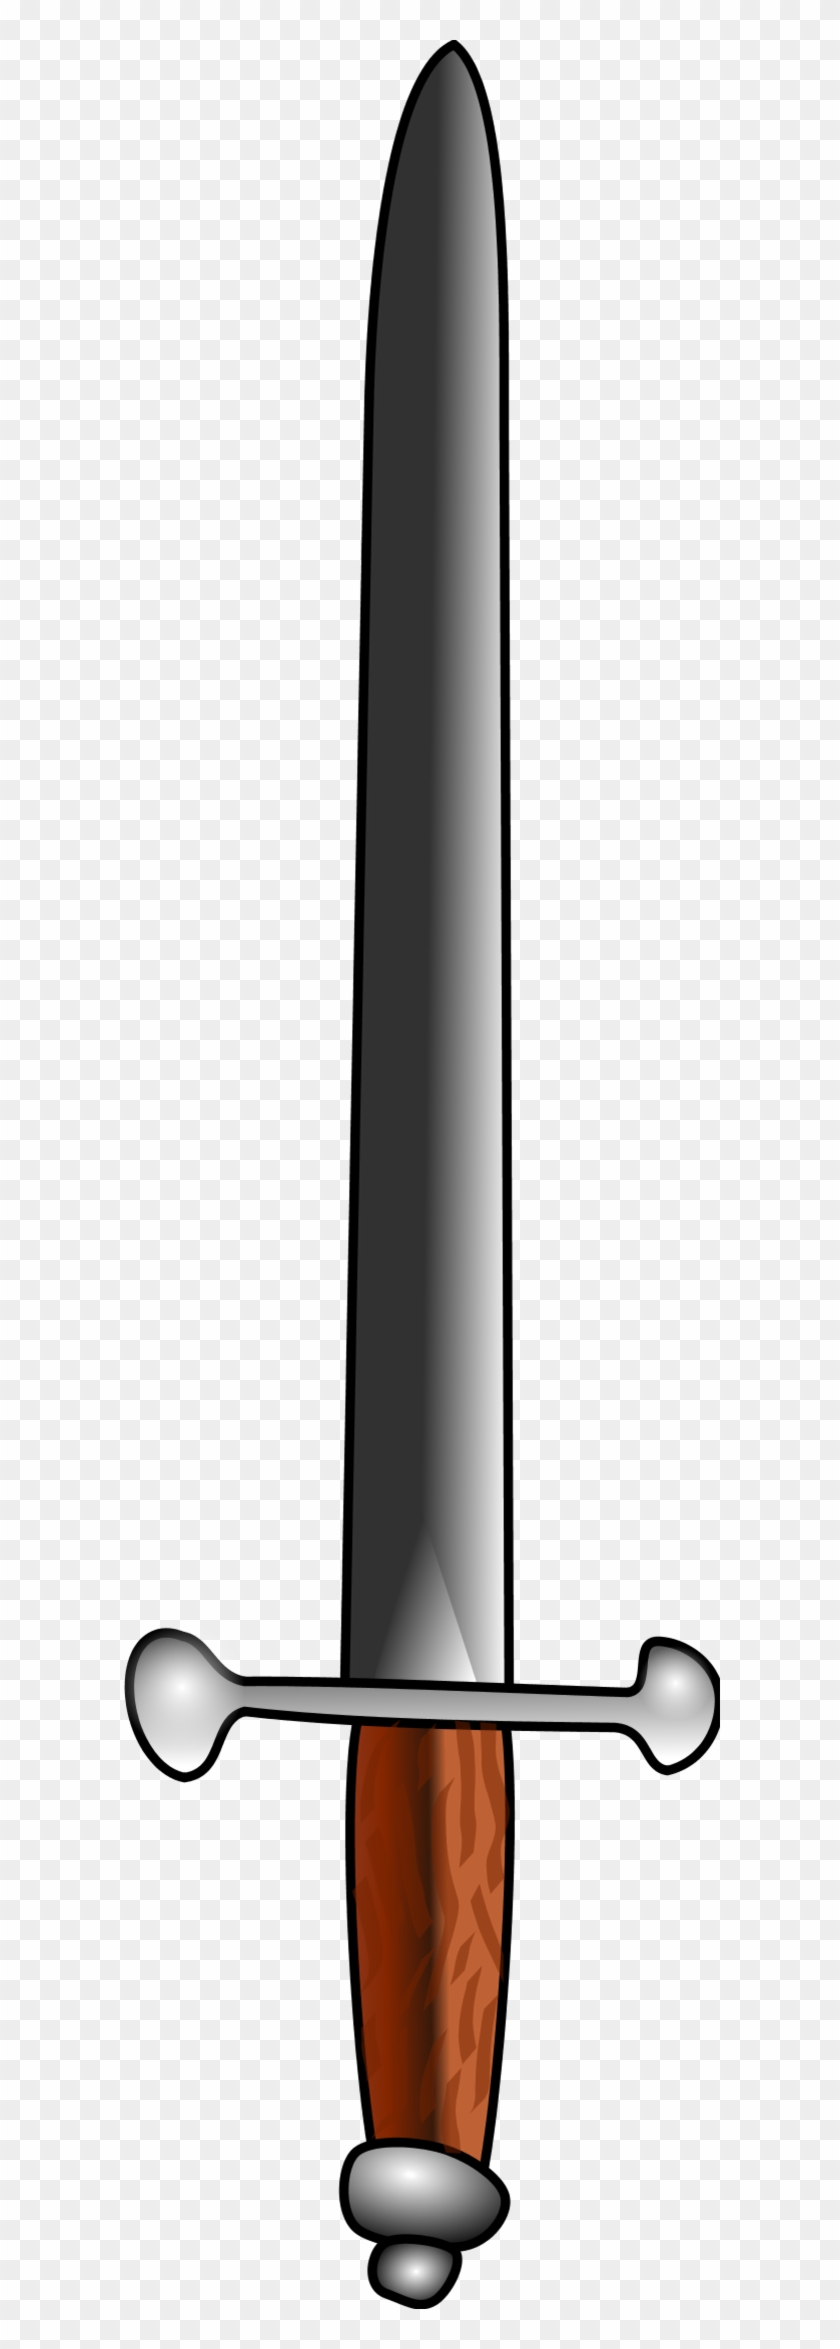 Dagger Clip Art - Simple Sword Drawing #849197